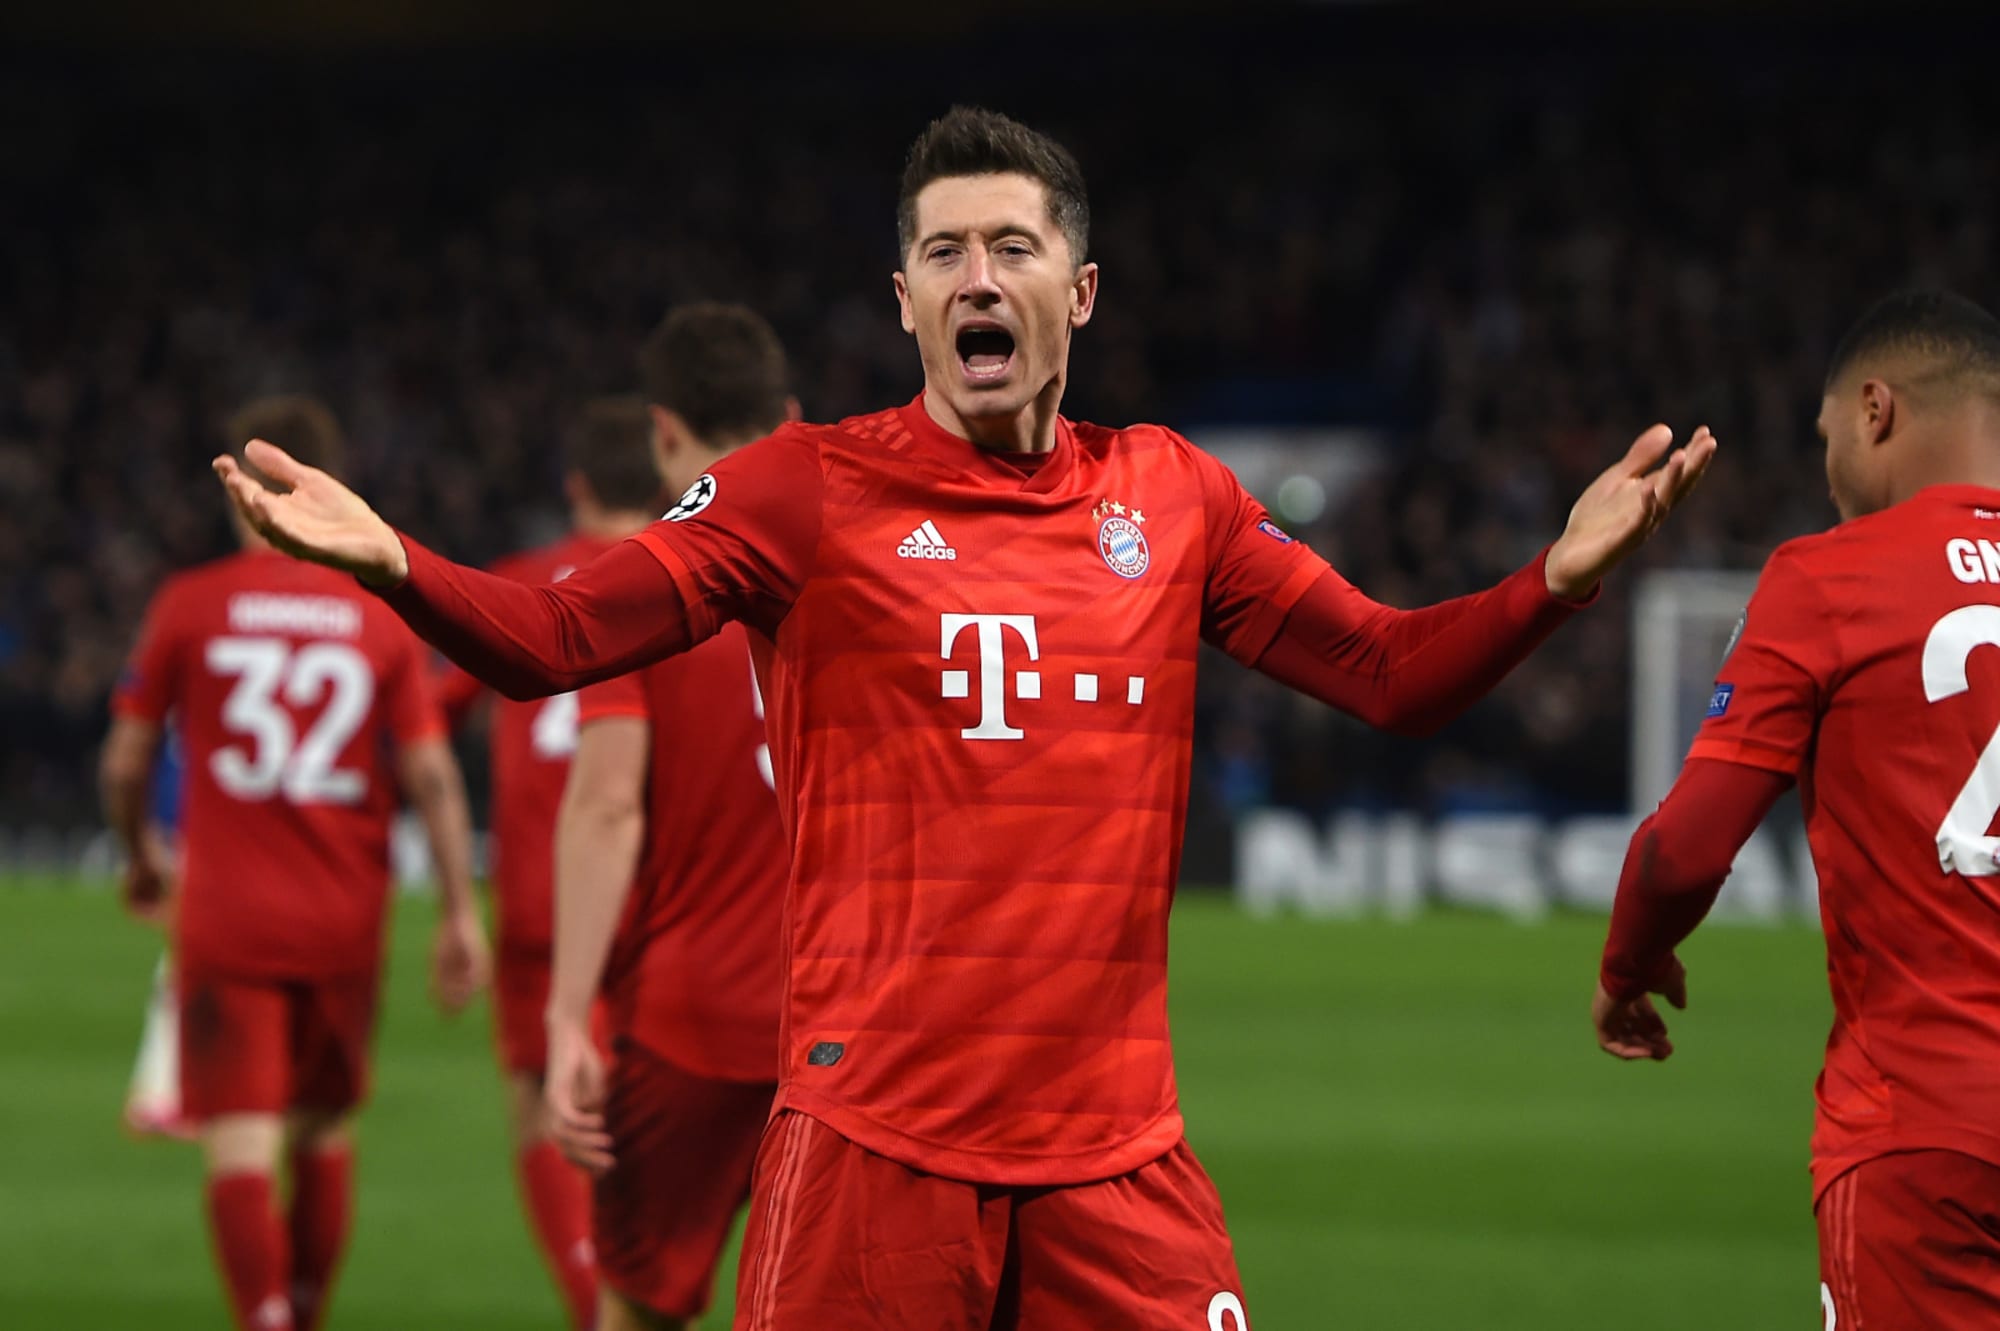 Robert Lewandowski delighted to play for Bayern Munich